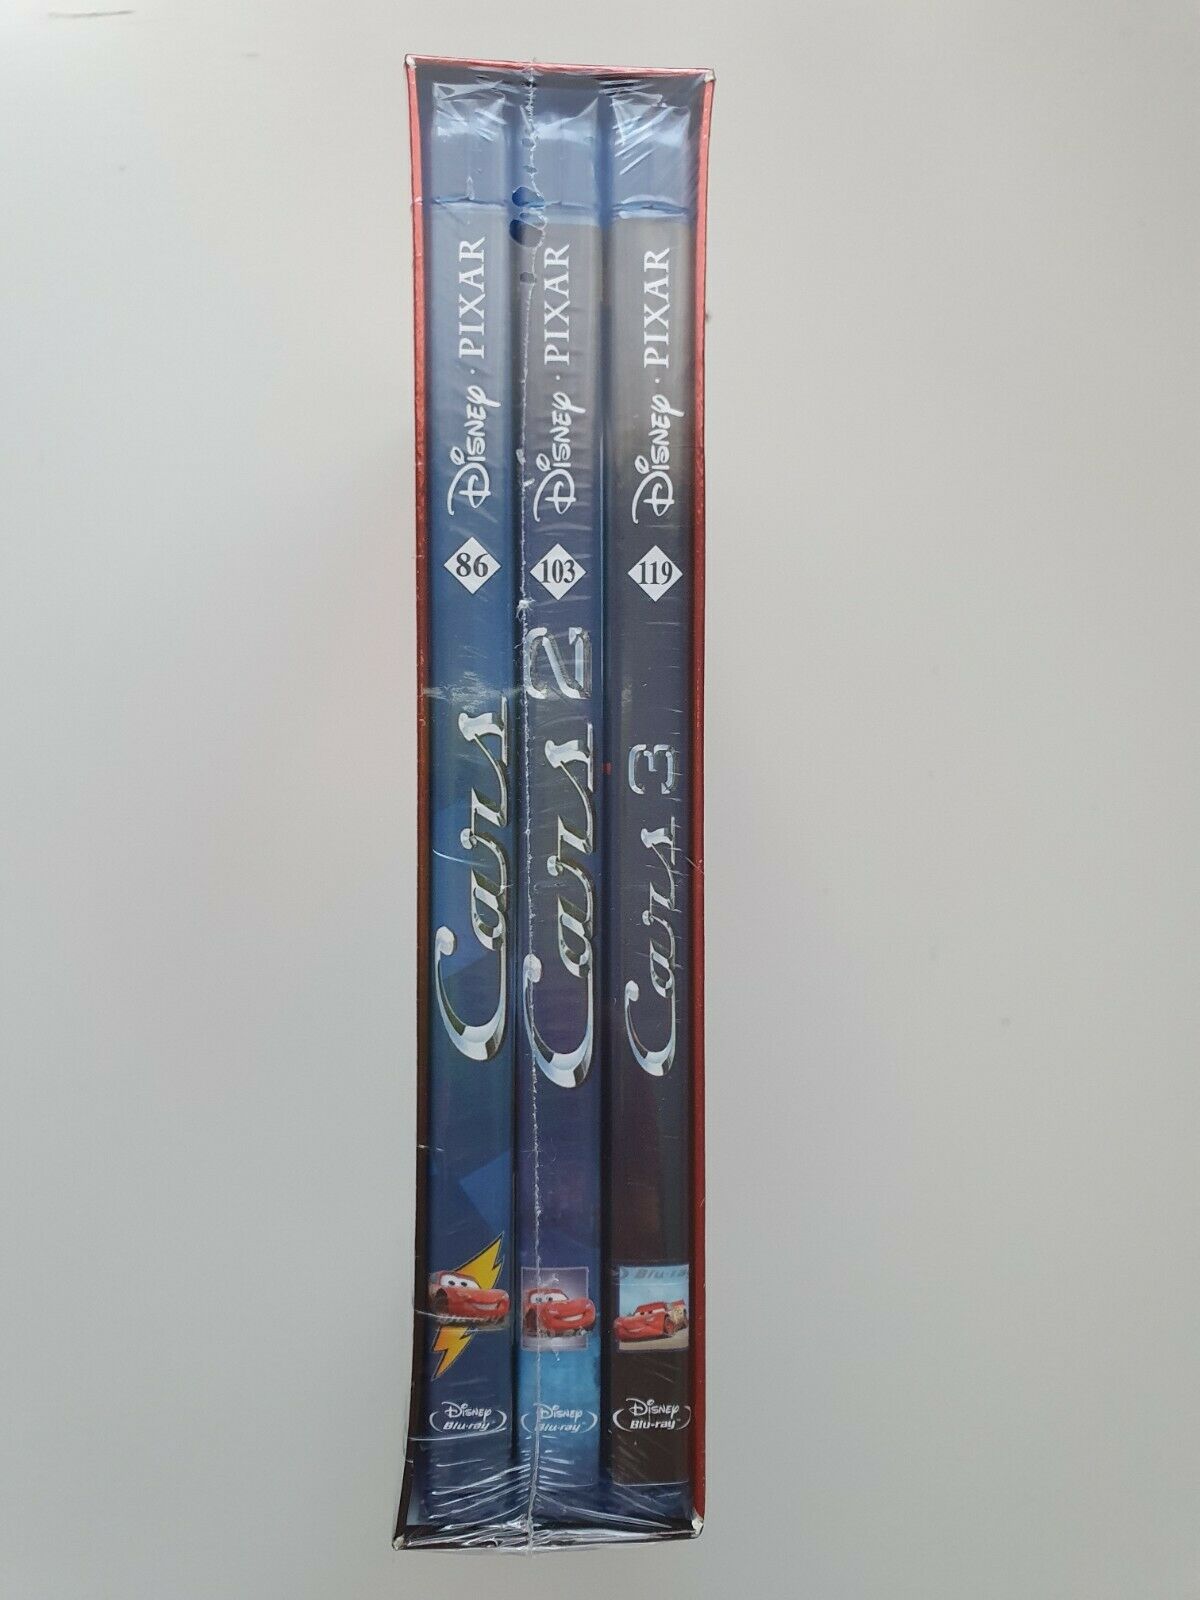 Cars (2006) Disney Pixar Owen Wilson Sealed DVD